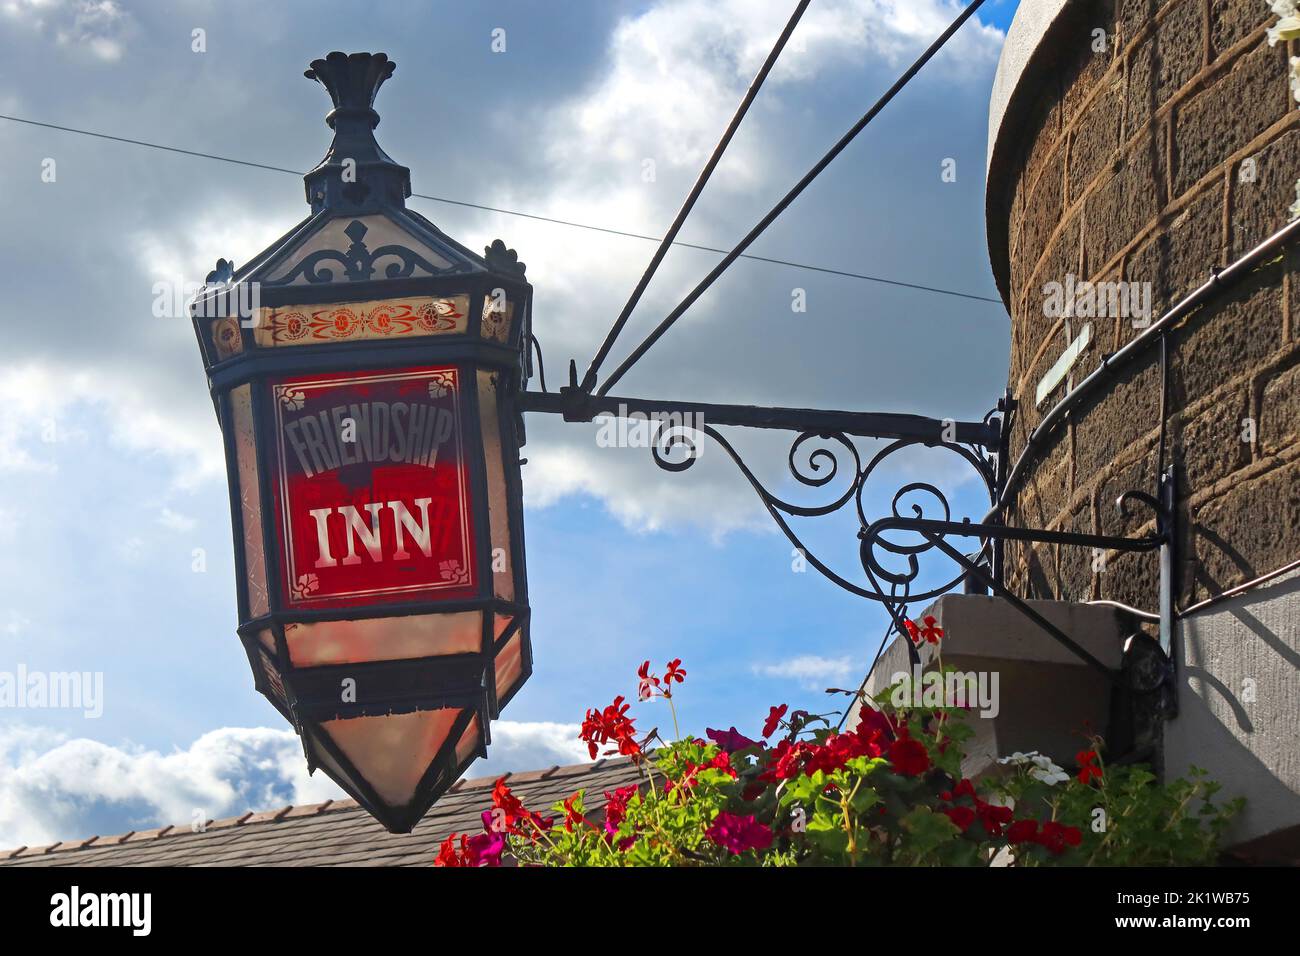 Red lamp at the Friendship Inn, 3, Arundel street, Glossop, High Peak, Derbyshire, England, UK, SK13 7AB Stock Photo